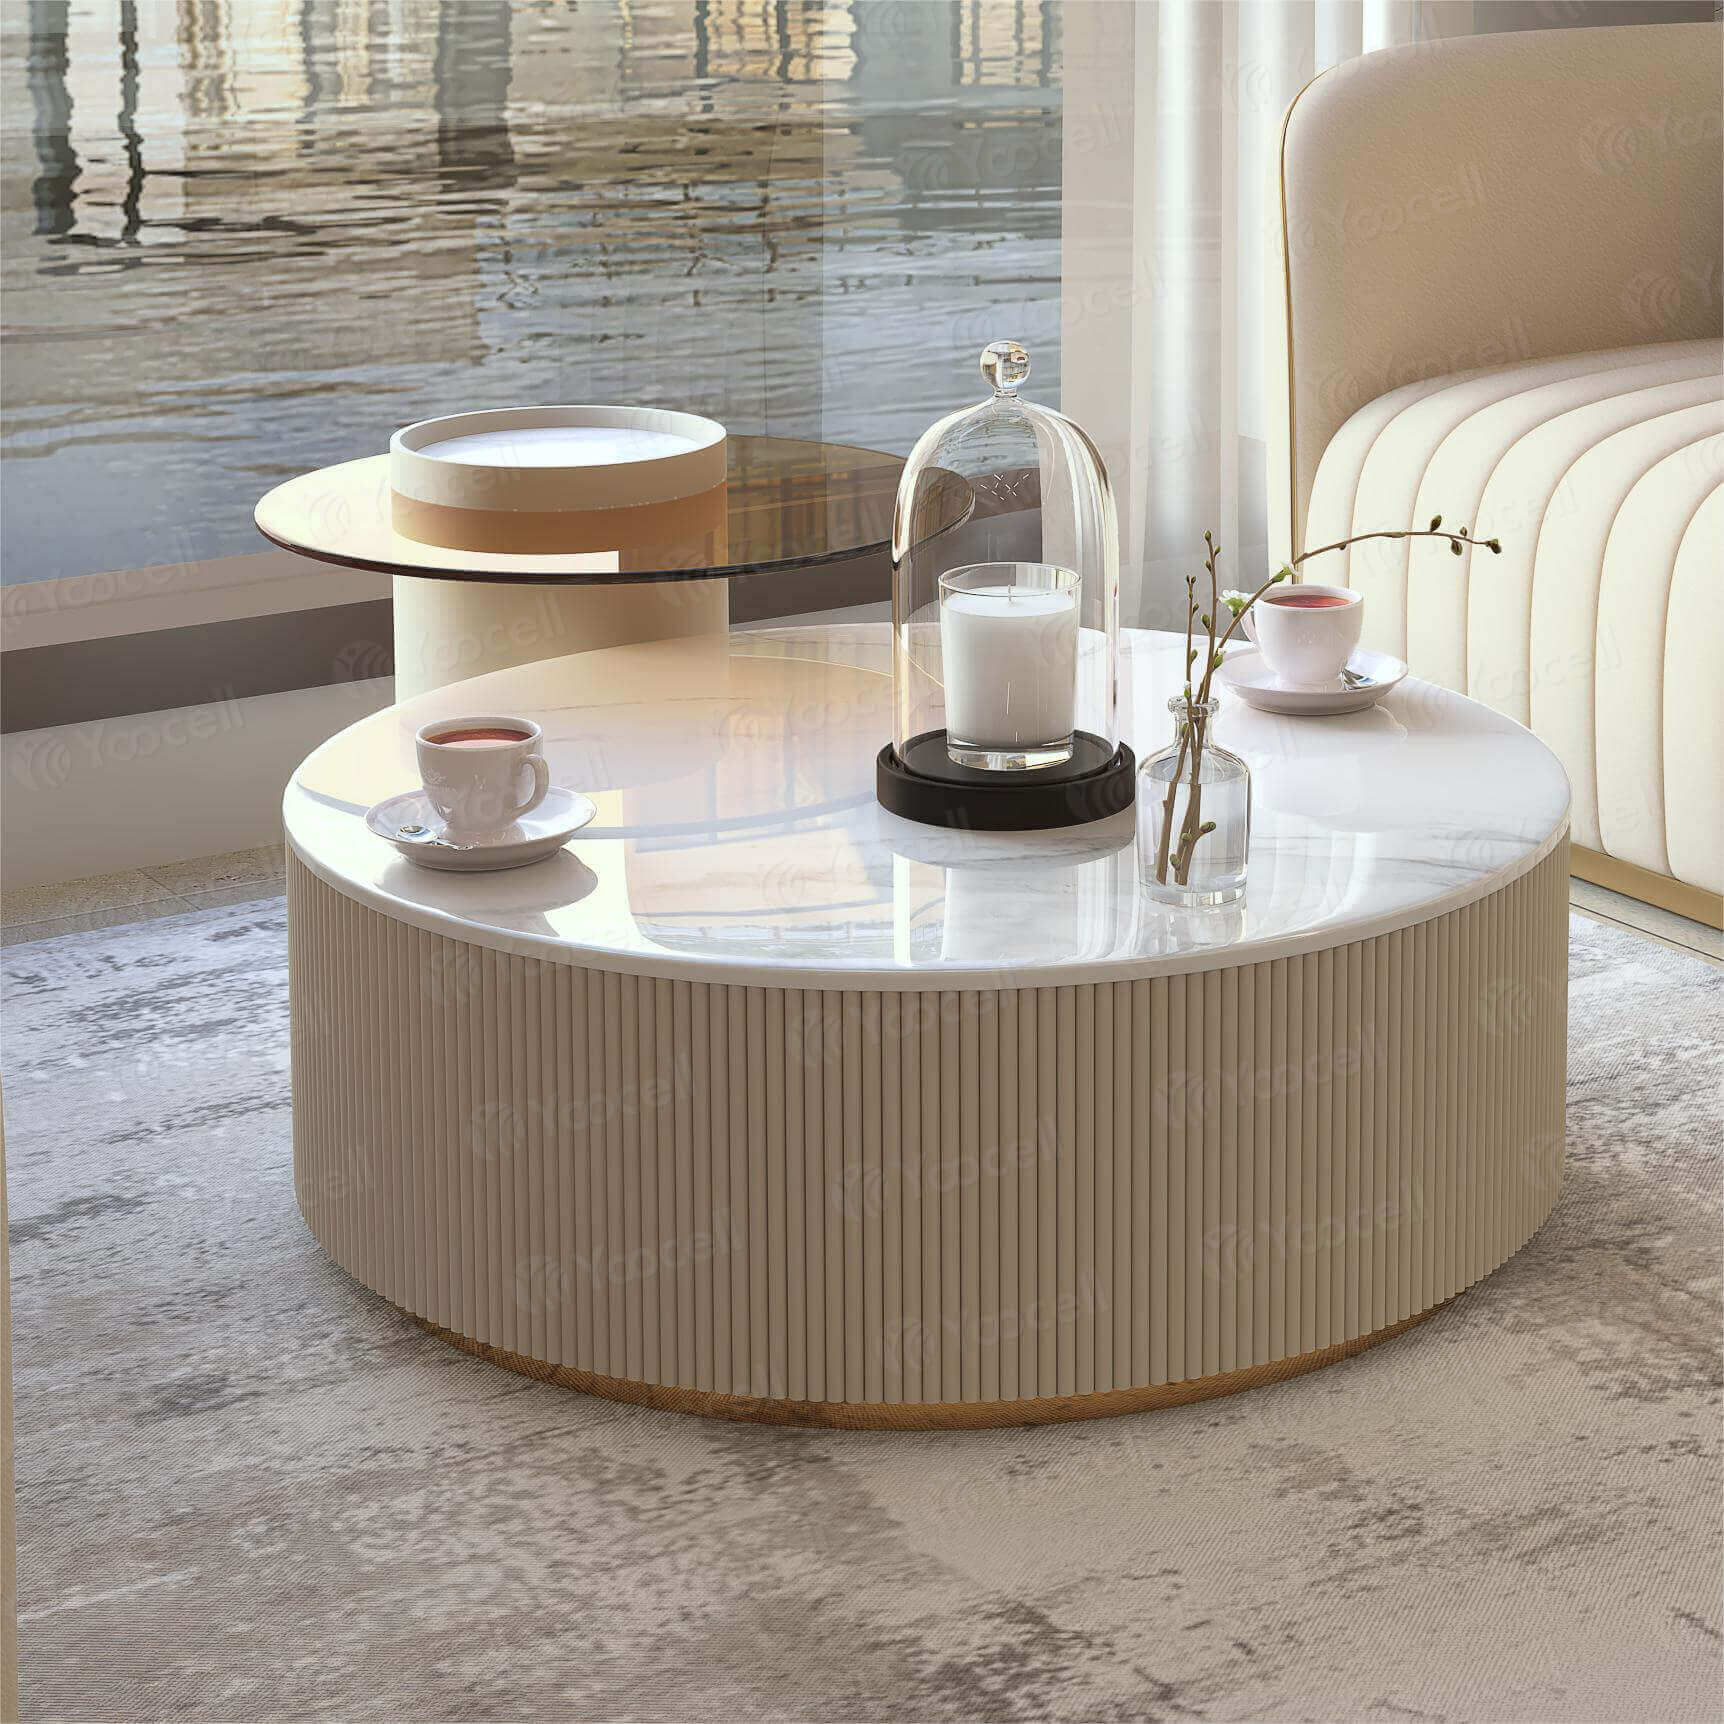 Yoocell cream coffee table for beauty salon lounge hair studio C1011 (1)